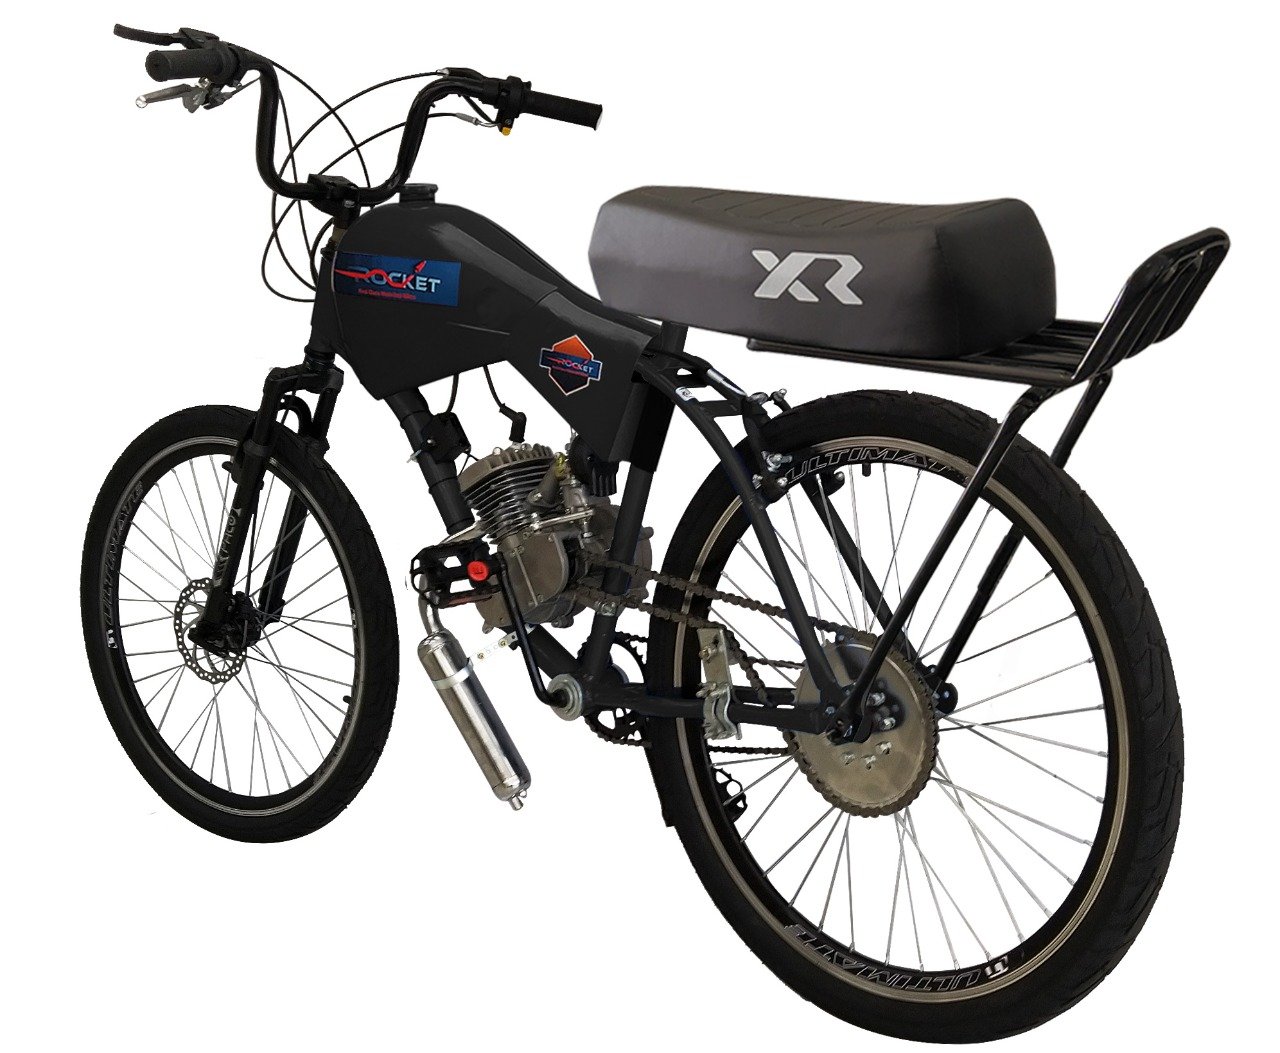 Bicicleta Motorizada 80cc Fr Disc/Susp com Carenagem Banco XR Rocket - 3